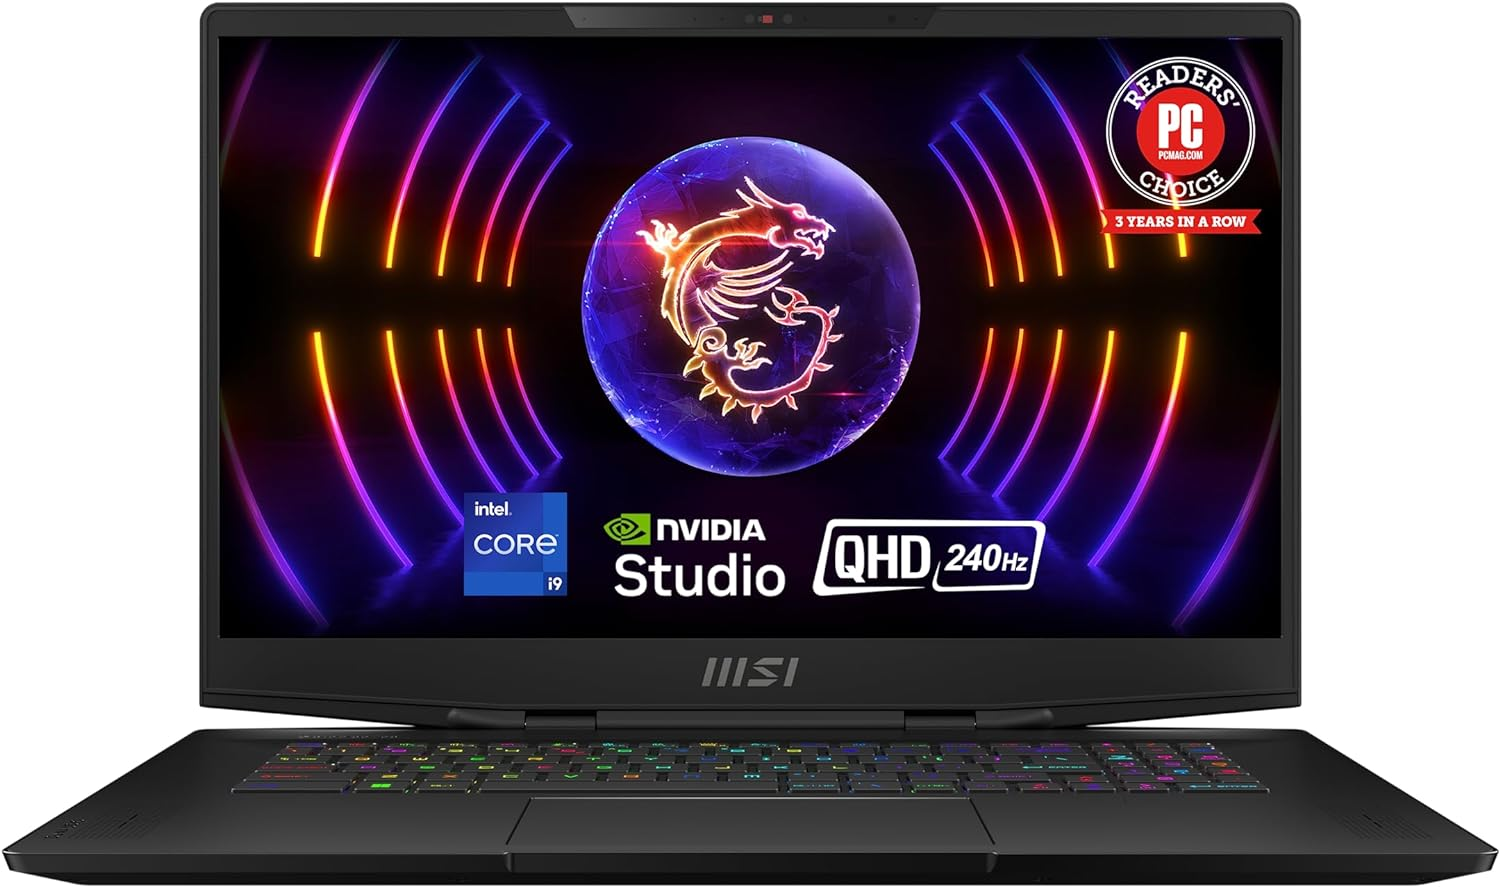 MSI Stealth 17 Studio 17.3" QHD 240Hz Gaming Laptop